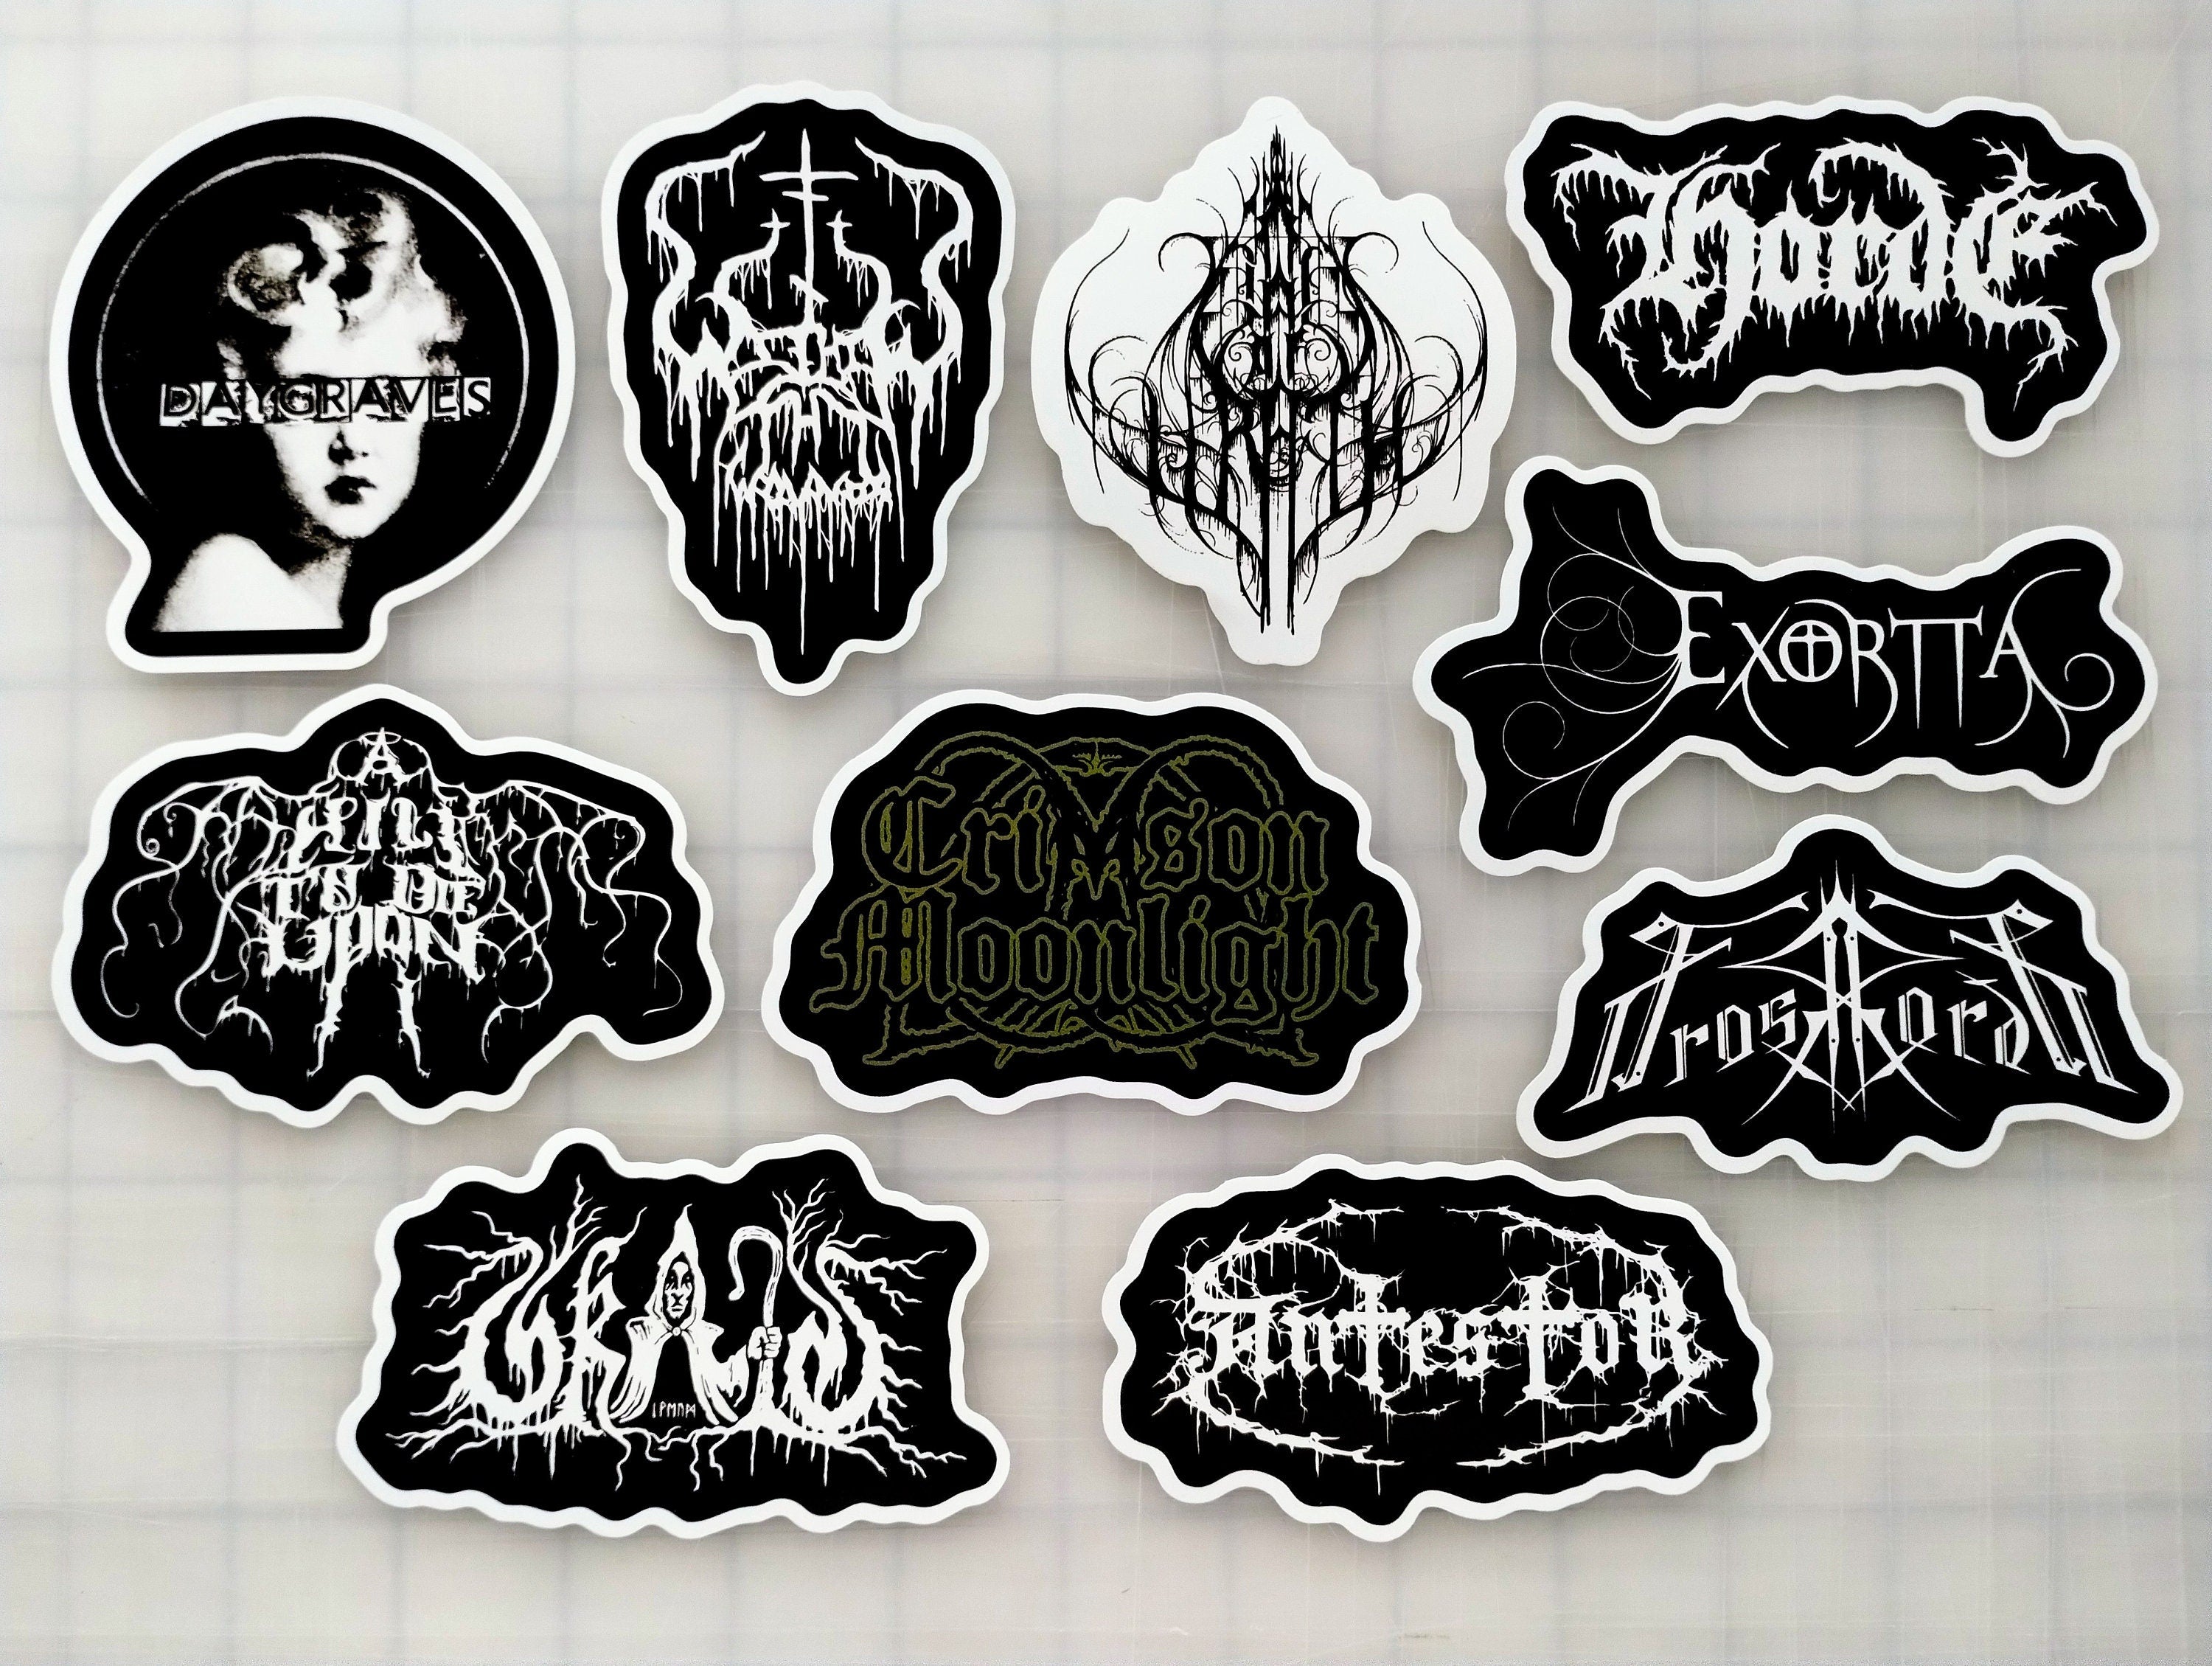 Unblack Metal / White Metal / Christian Black Metal Sticker Pack